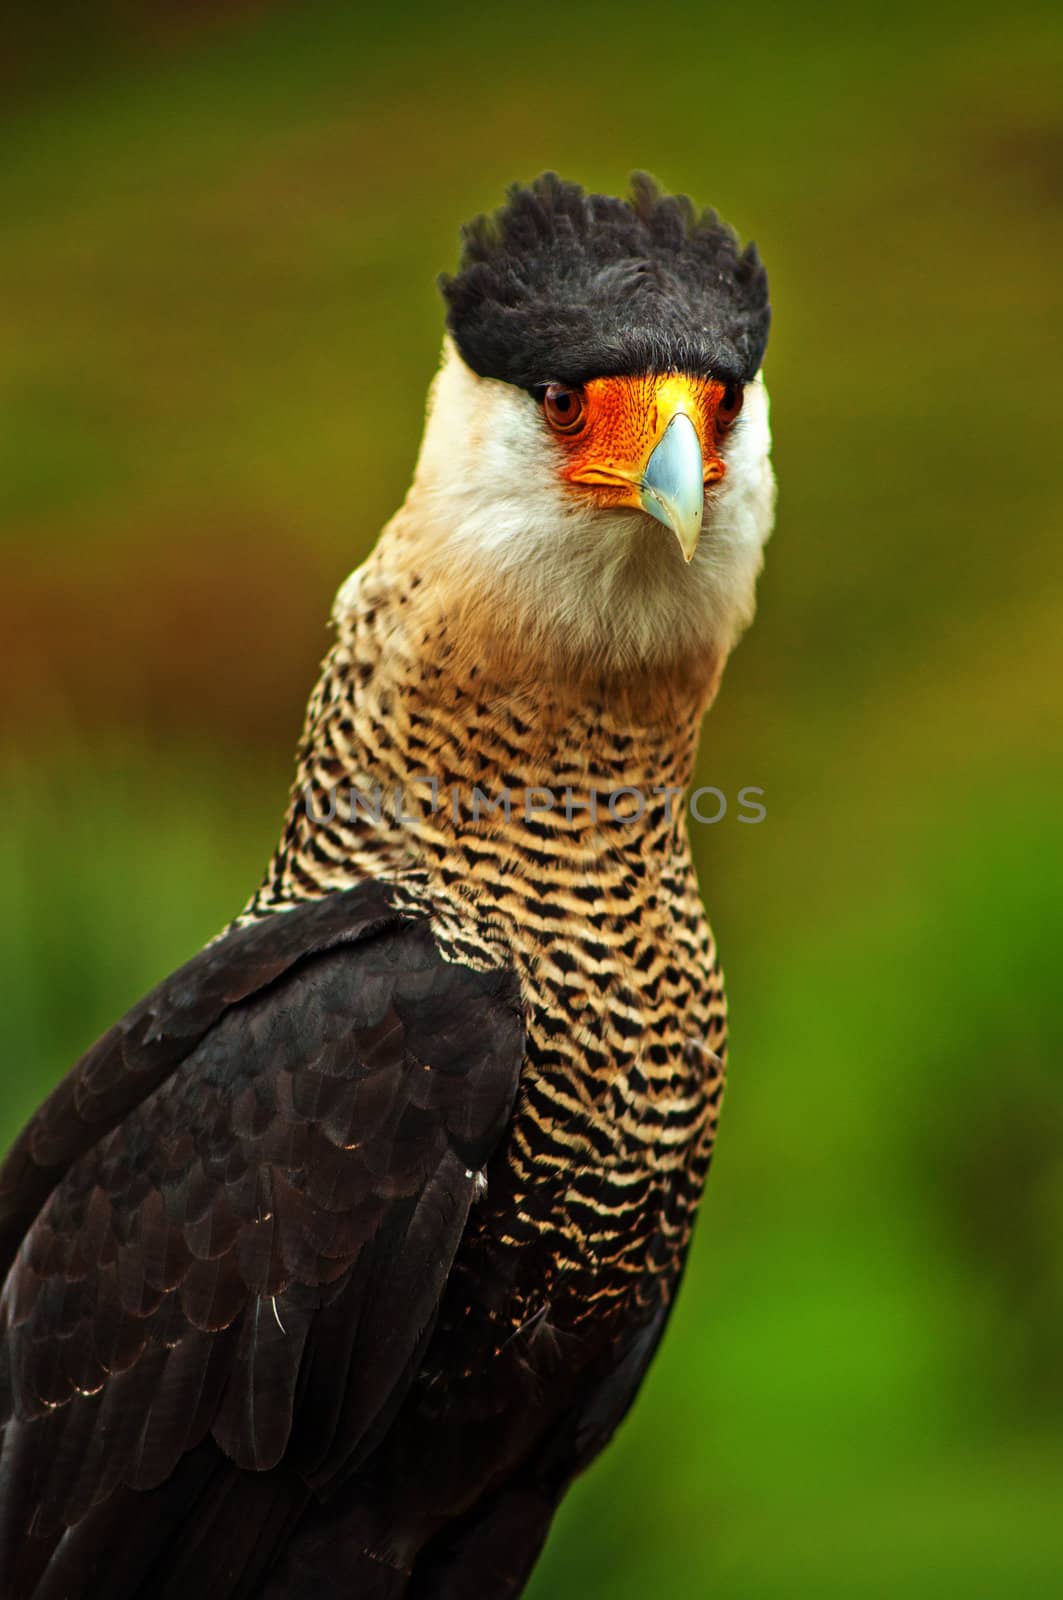 An image of a Caracara, a bird of prey.